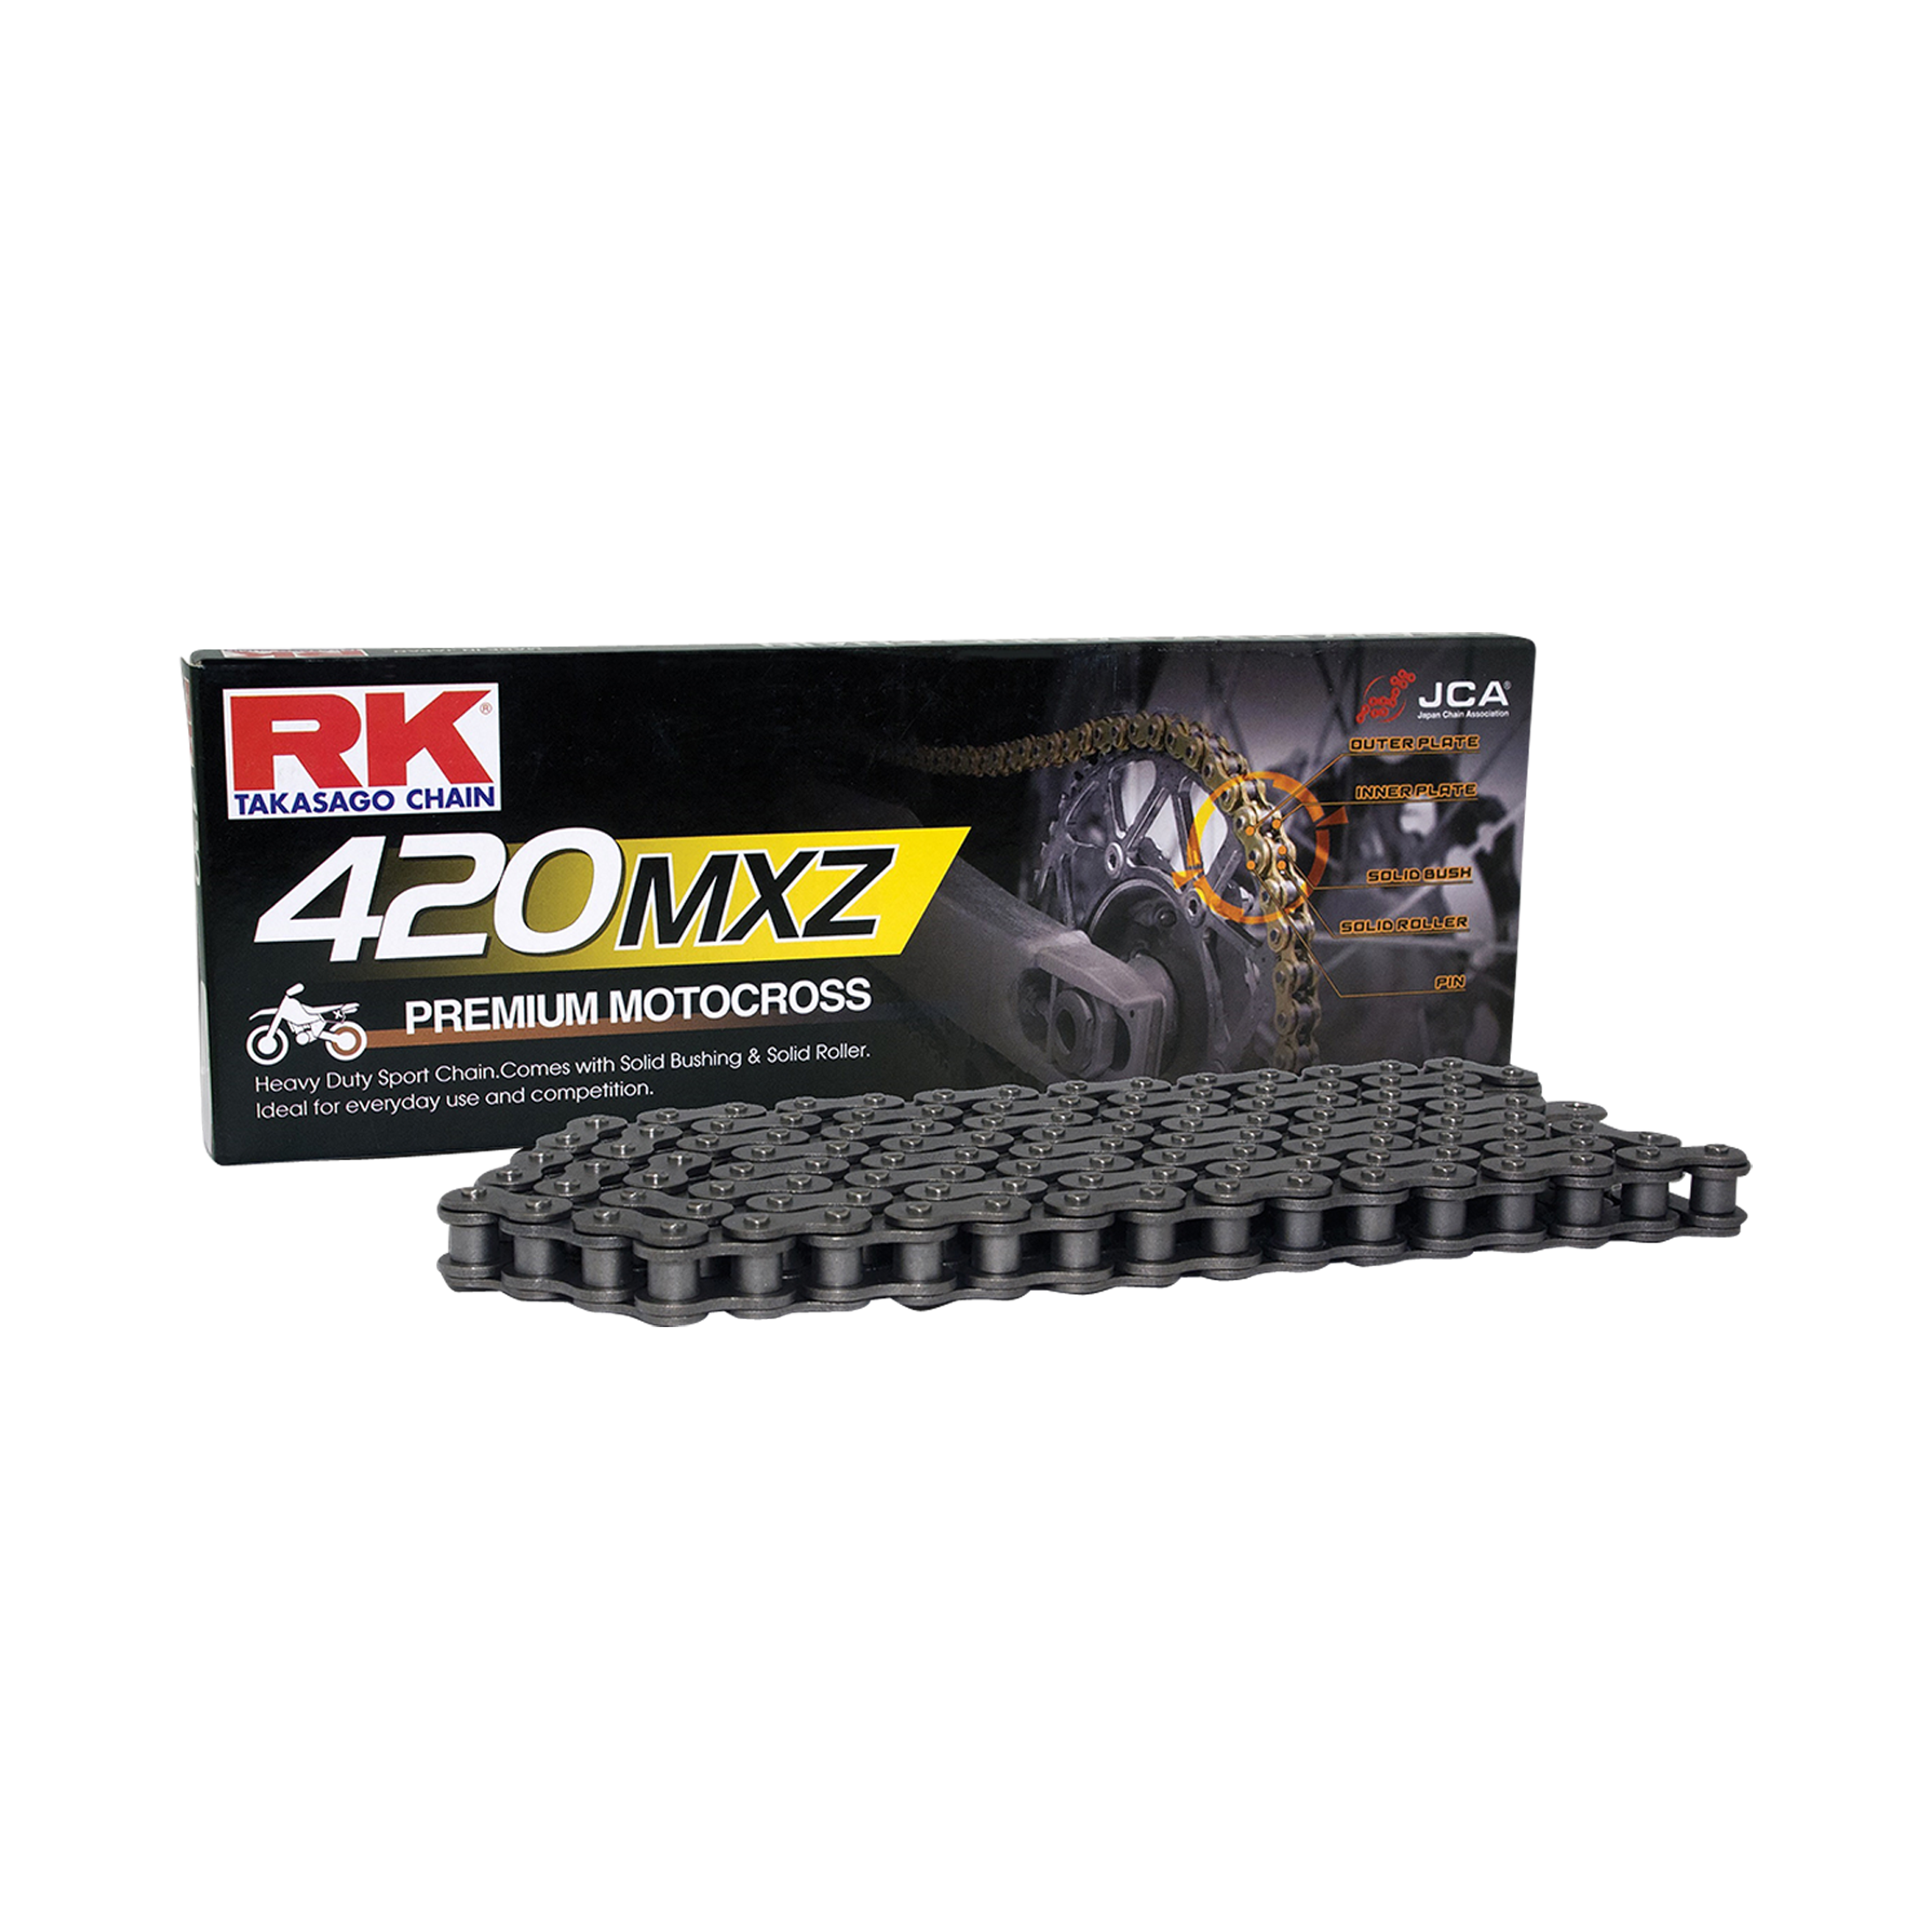 RK Chain 420MXZ Chain Grey – Search by model - Dirt cheap price